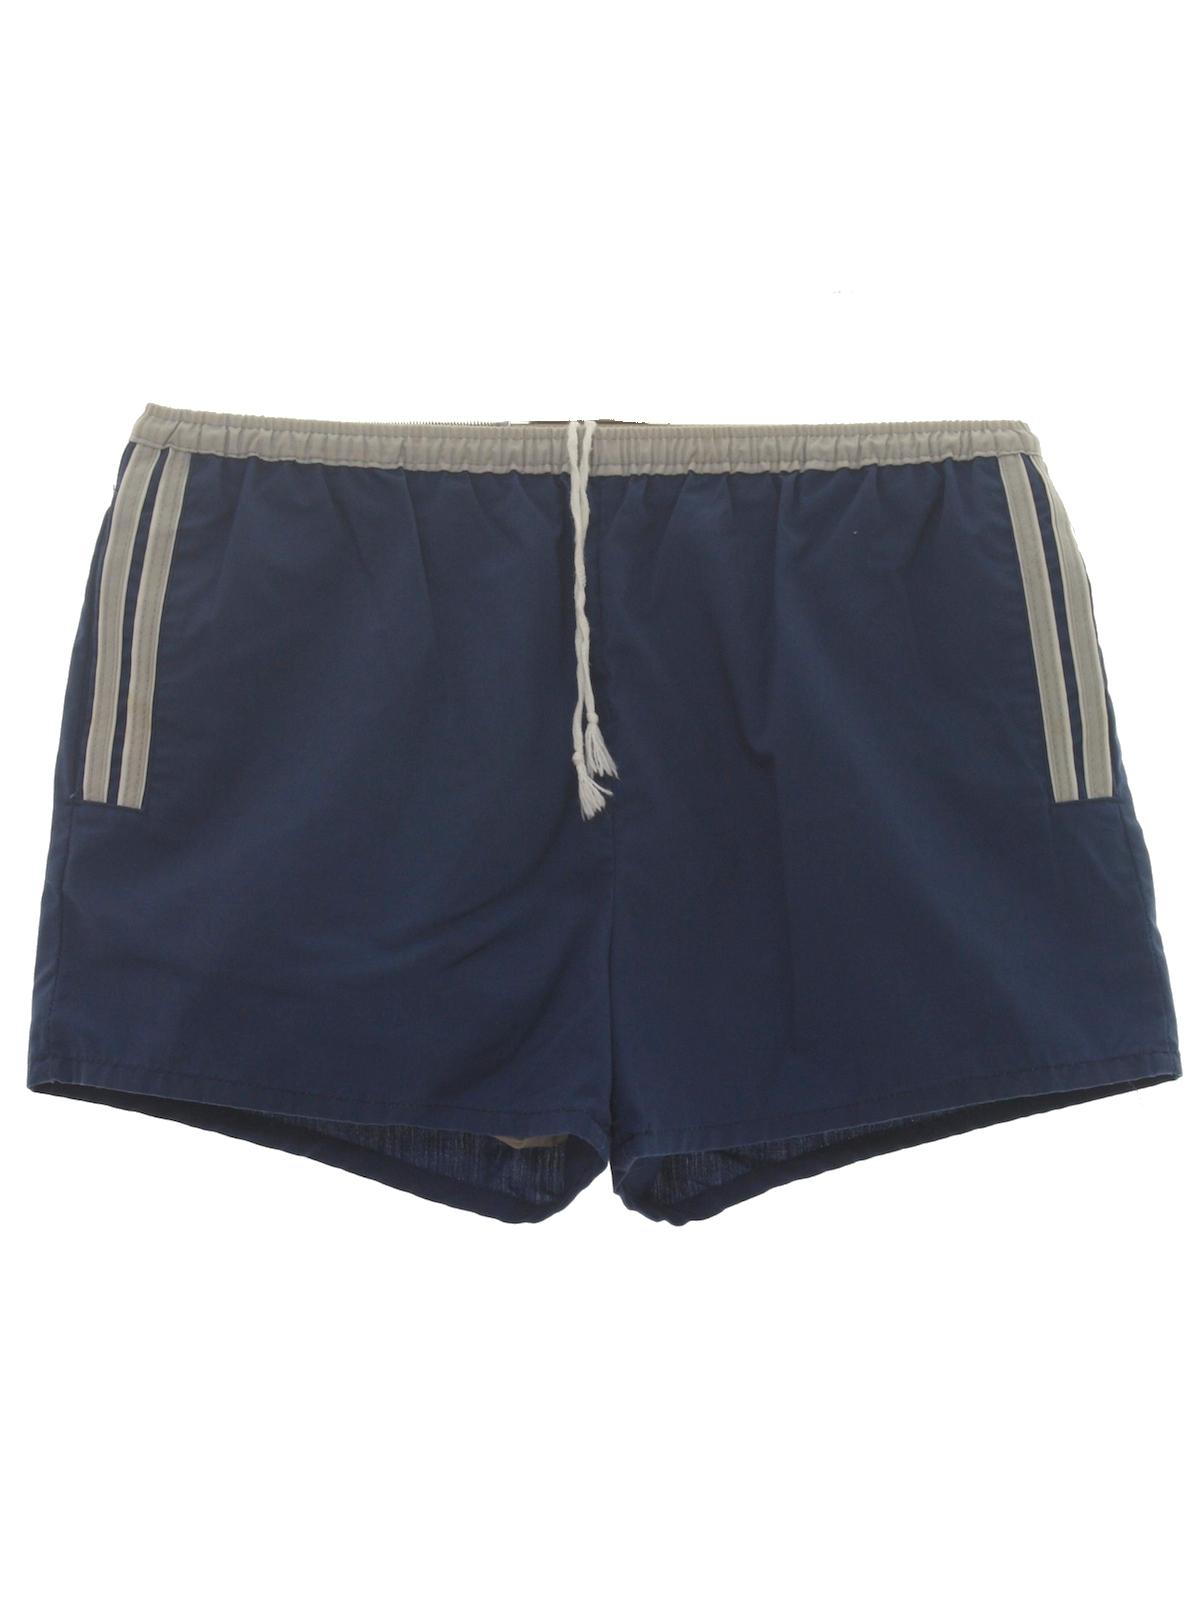 Eighties Jordache Shorts: 80s -Jordache- Mens navy blue background ...